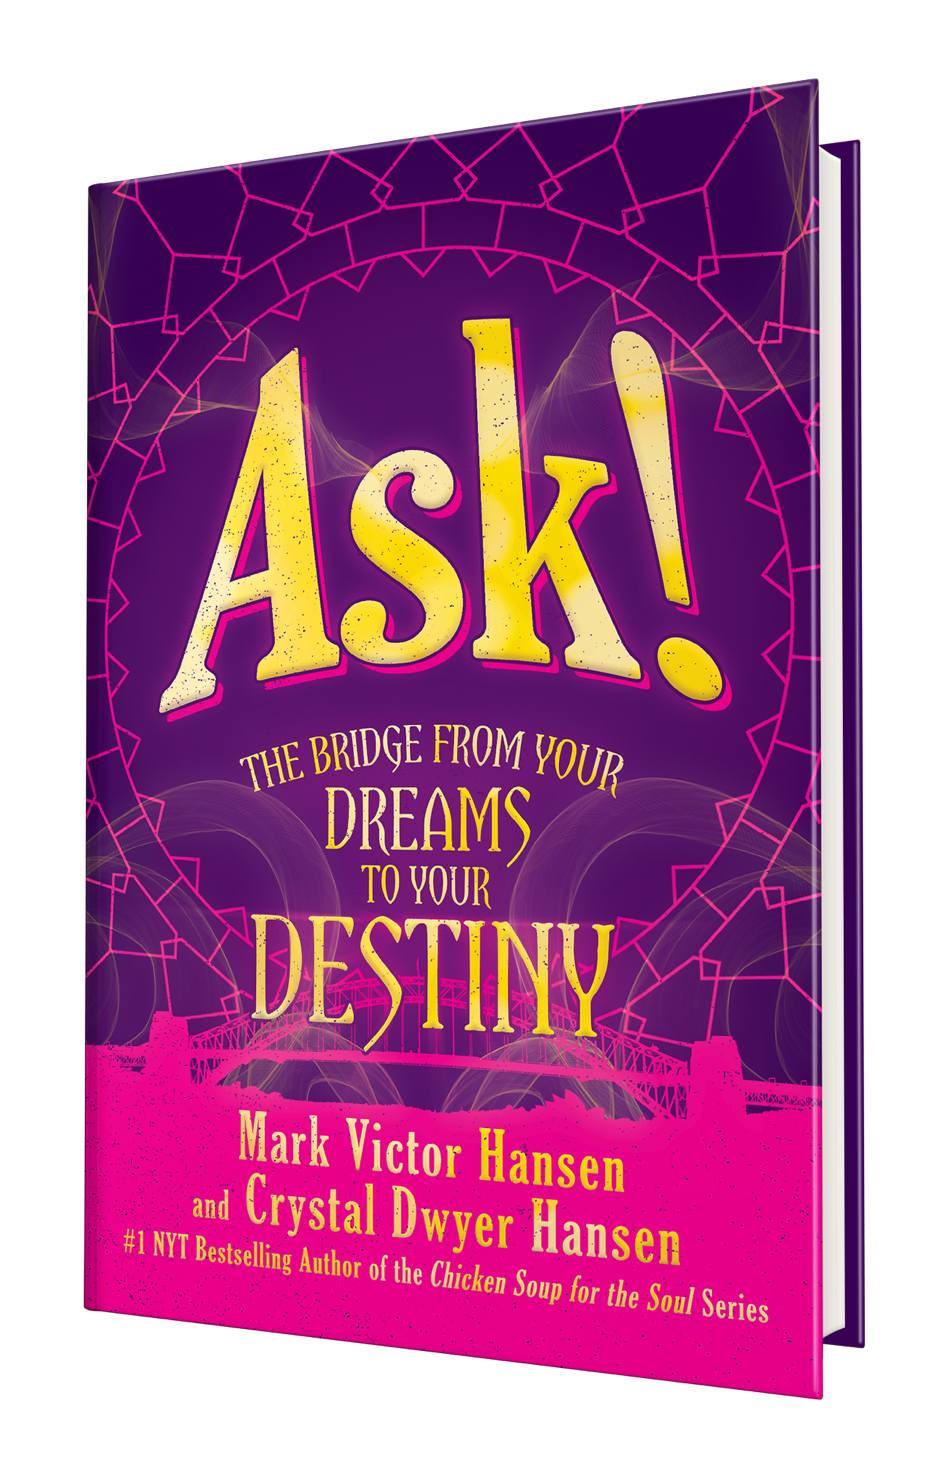 ASK!, Mark Victor Hansen, Crystal Dwyer Hansen, dreams, purpose, faith, calling, destiny, leadership, transformation, lifestyle